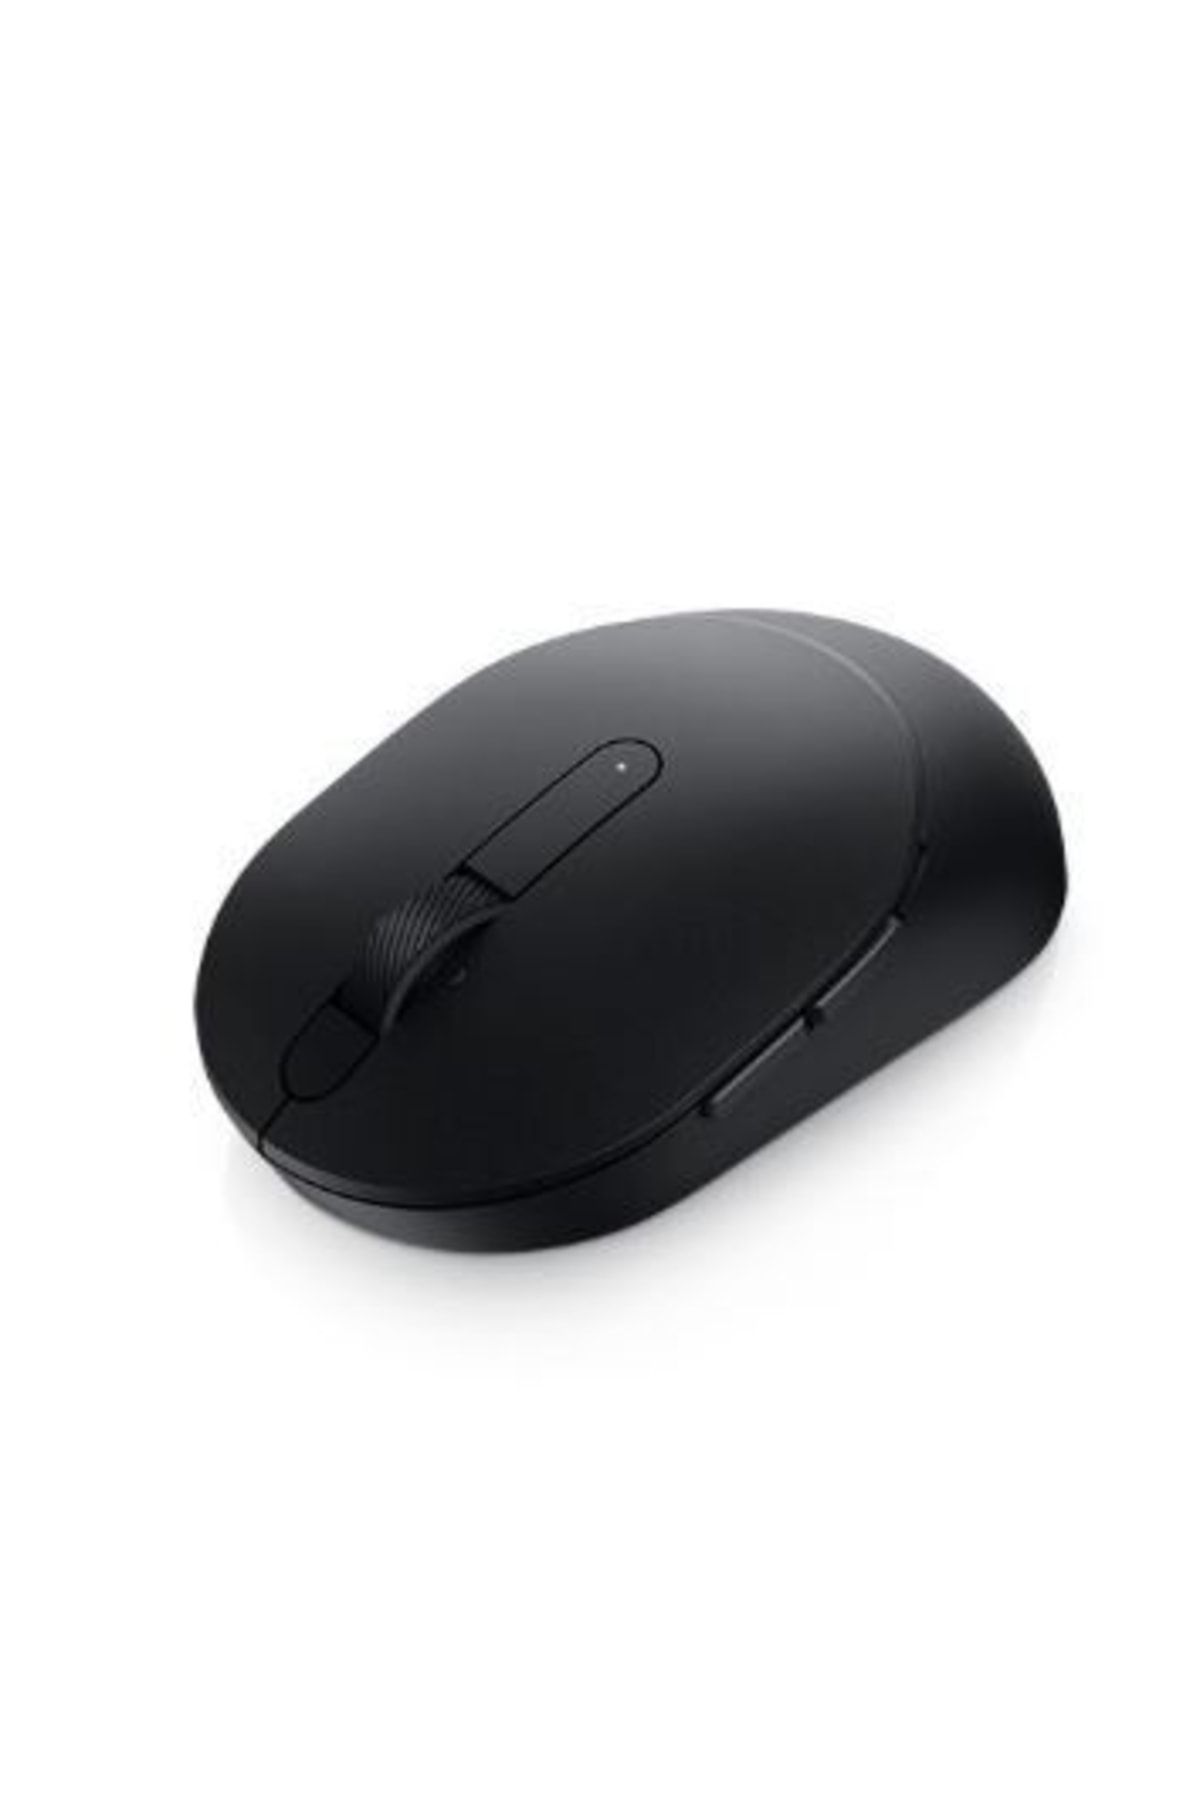 Dell 570-abho Pro Wireless Mouse - Ms5120w - Black